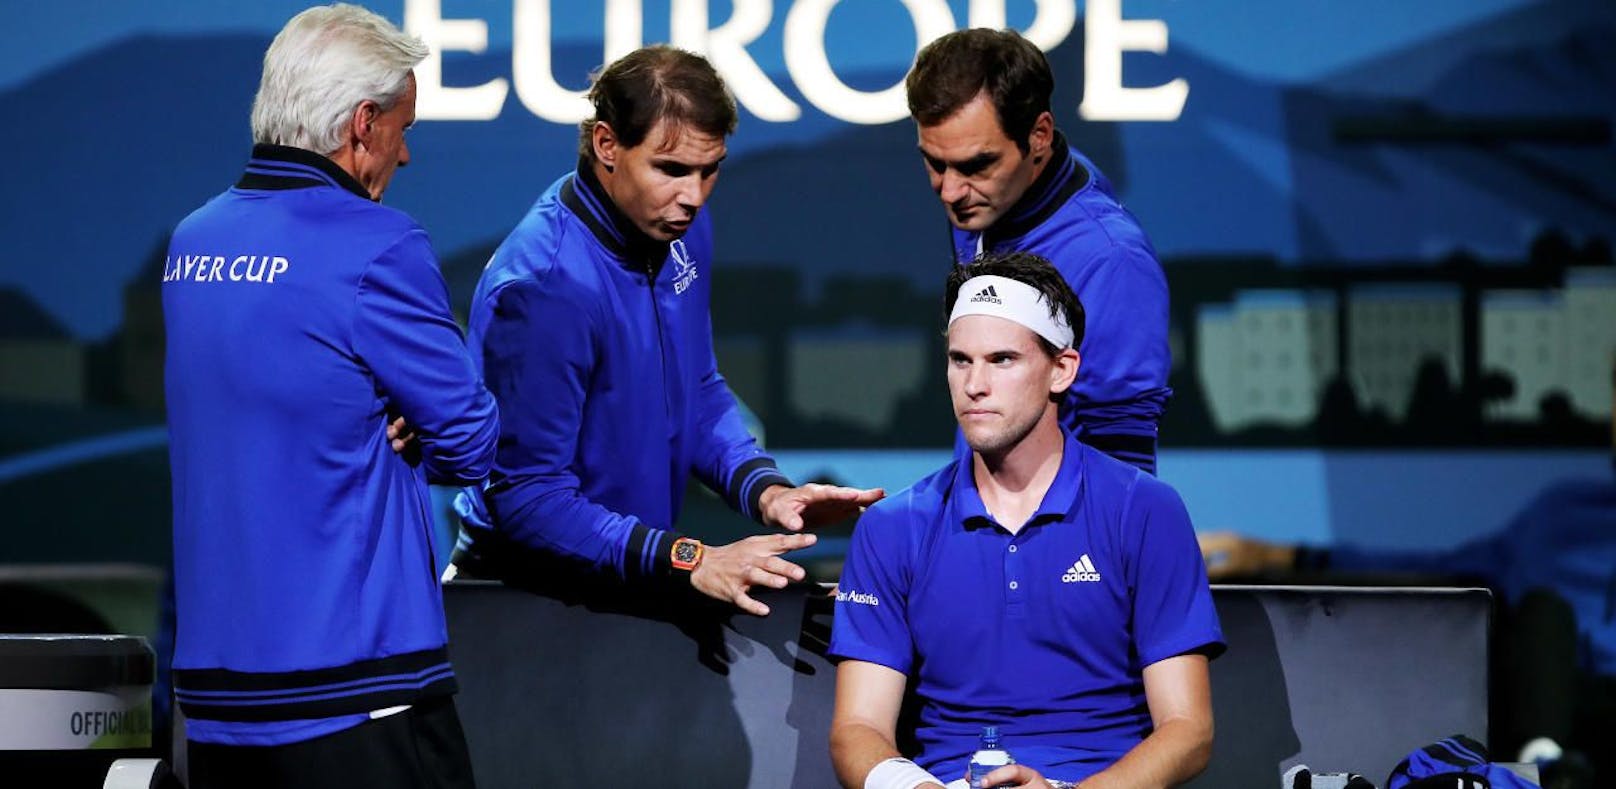 Björn Borg, Rafael Nadal, Dominic Thiem und Roger Federer